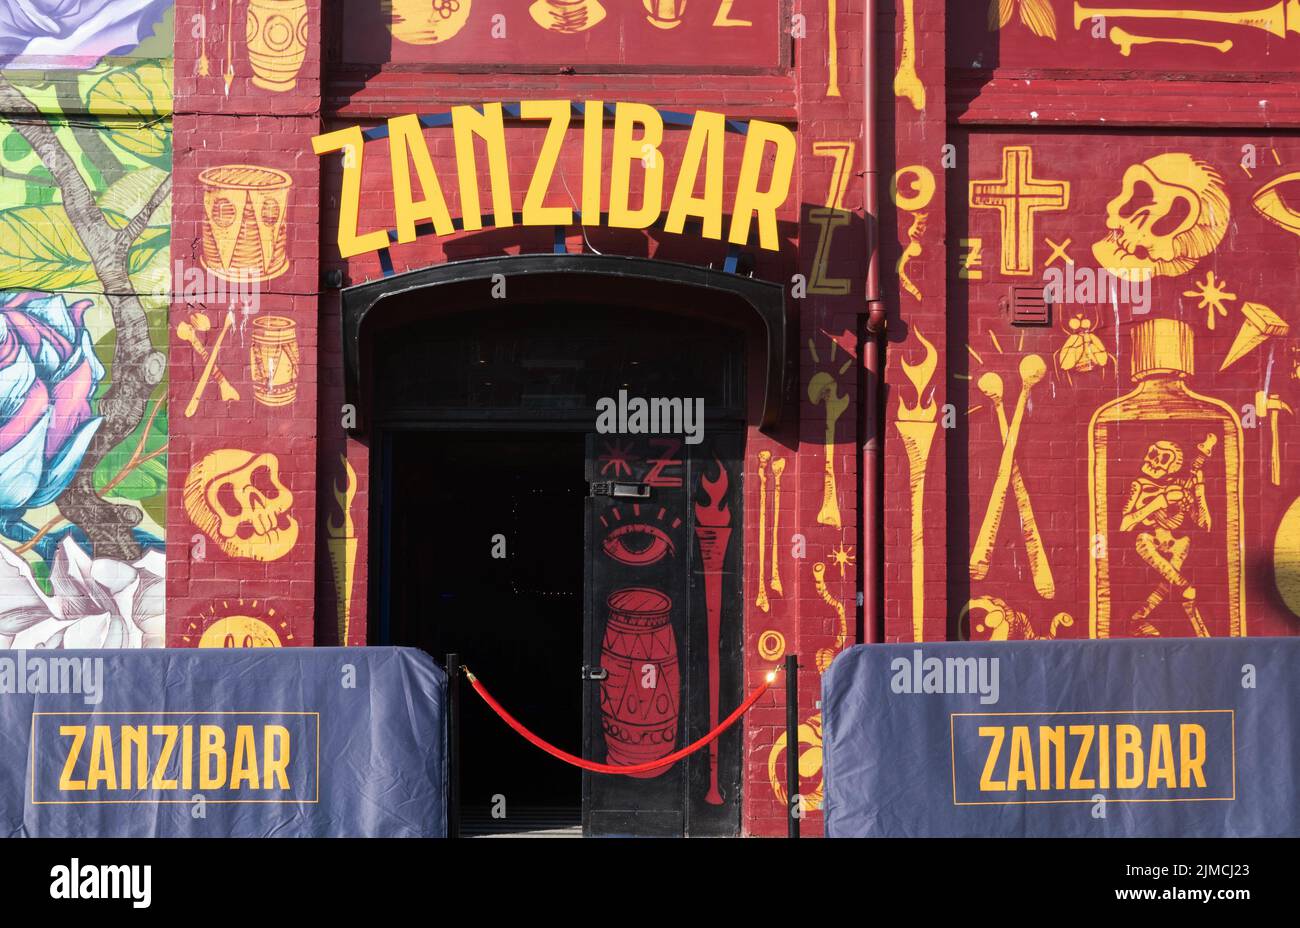 Zanzibar live music club and bar in Liverpool Stock Photo